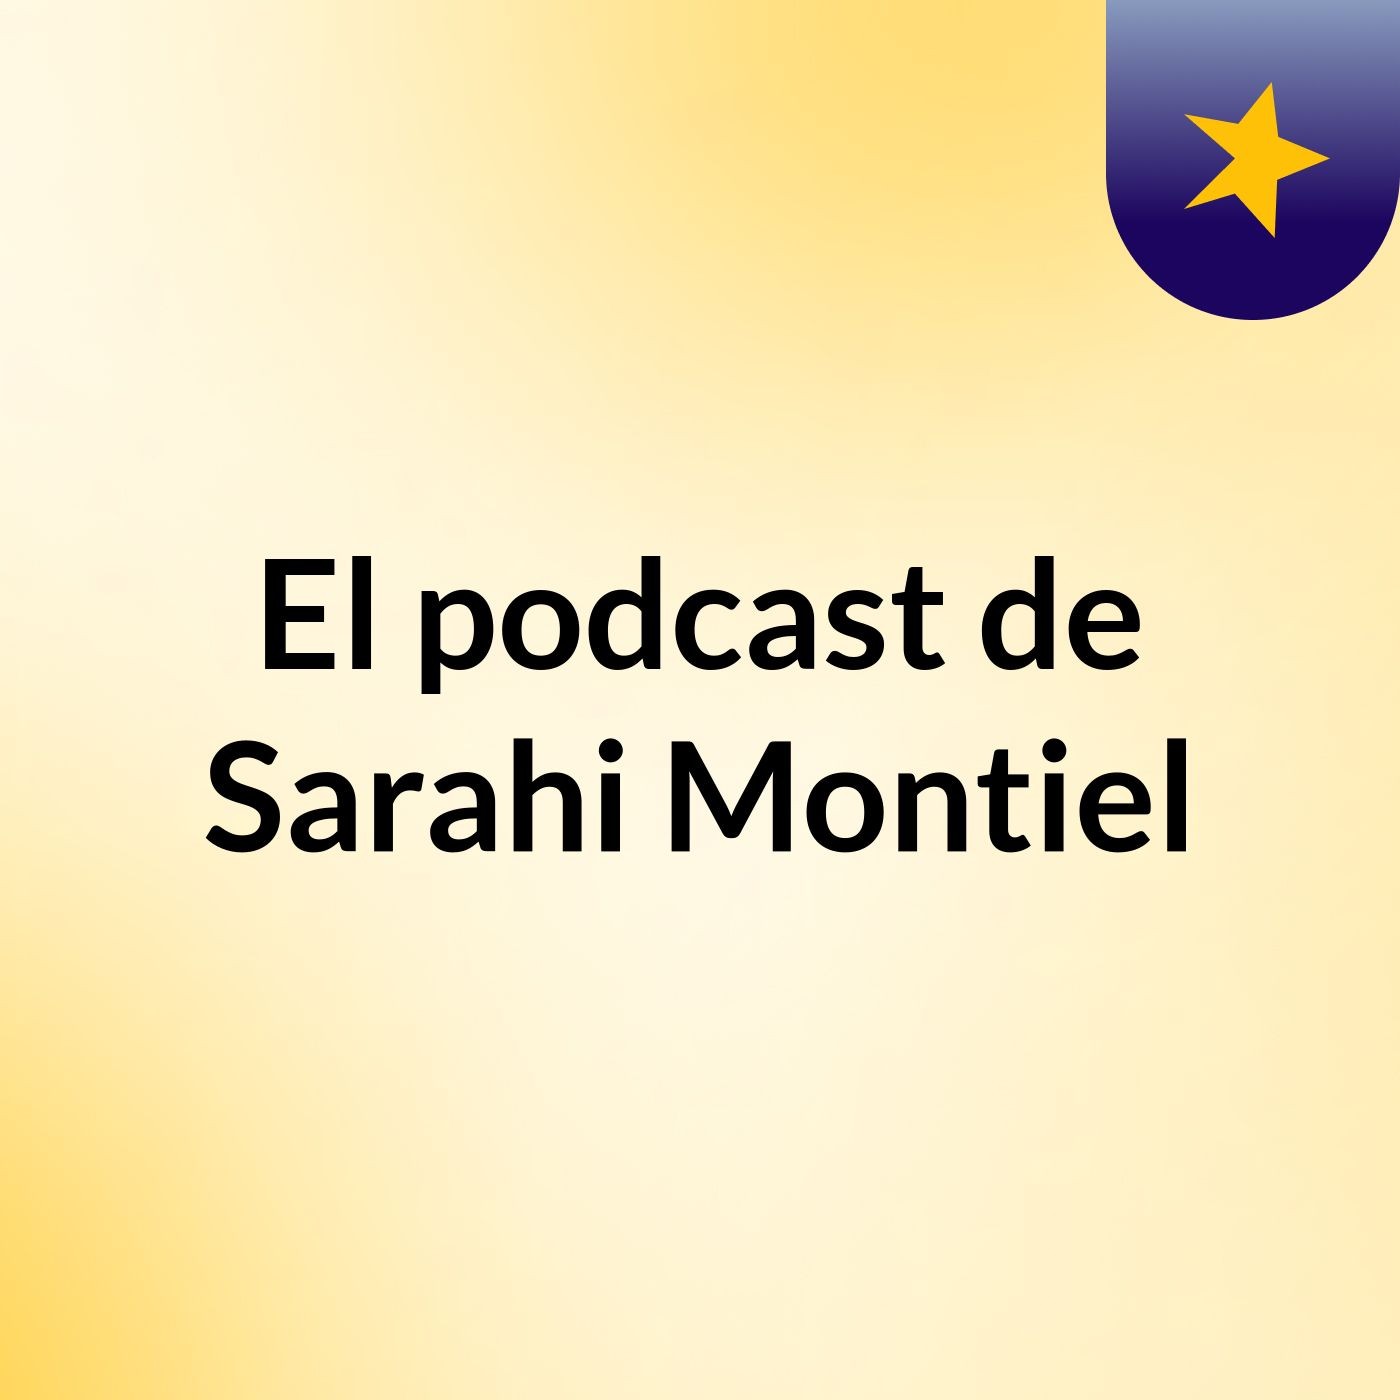 El podcast de Sarahi Montiel